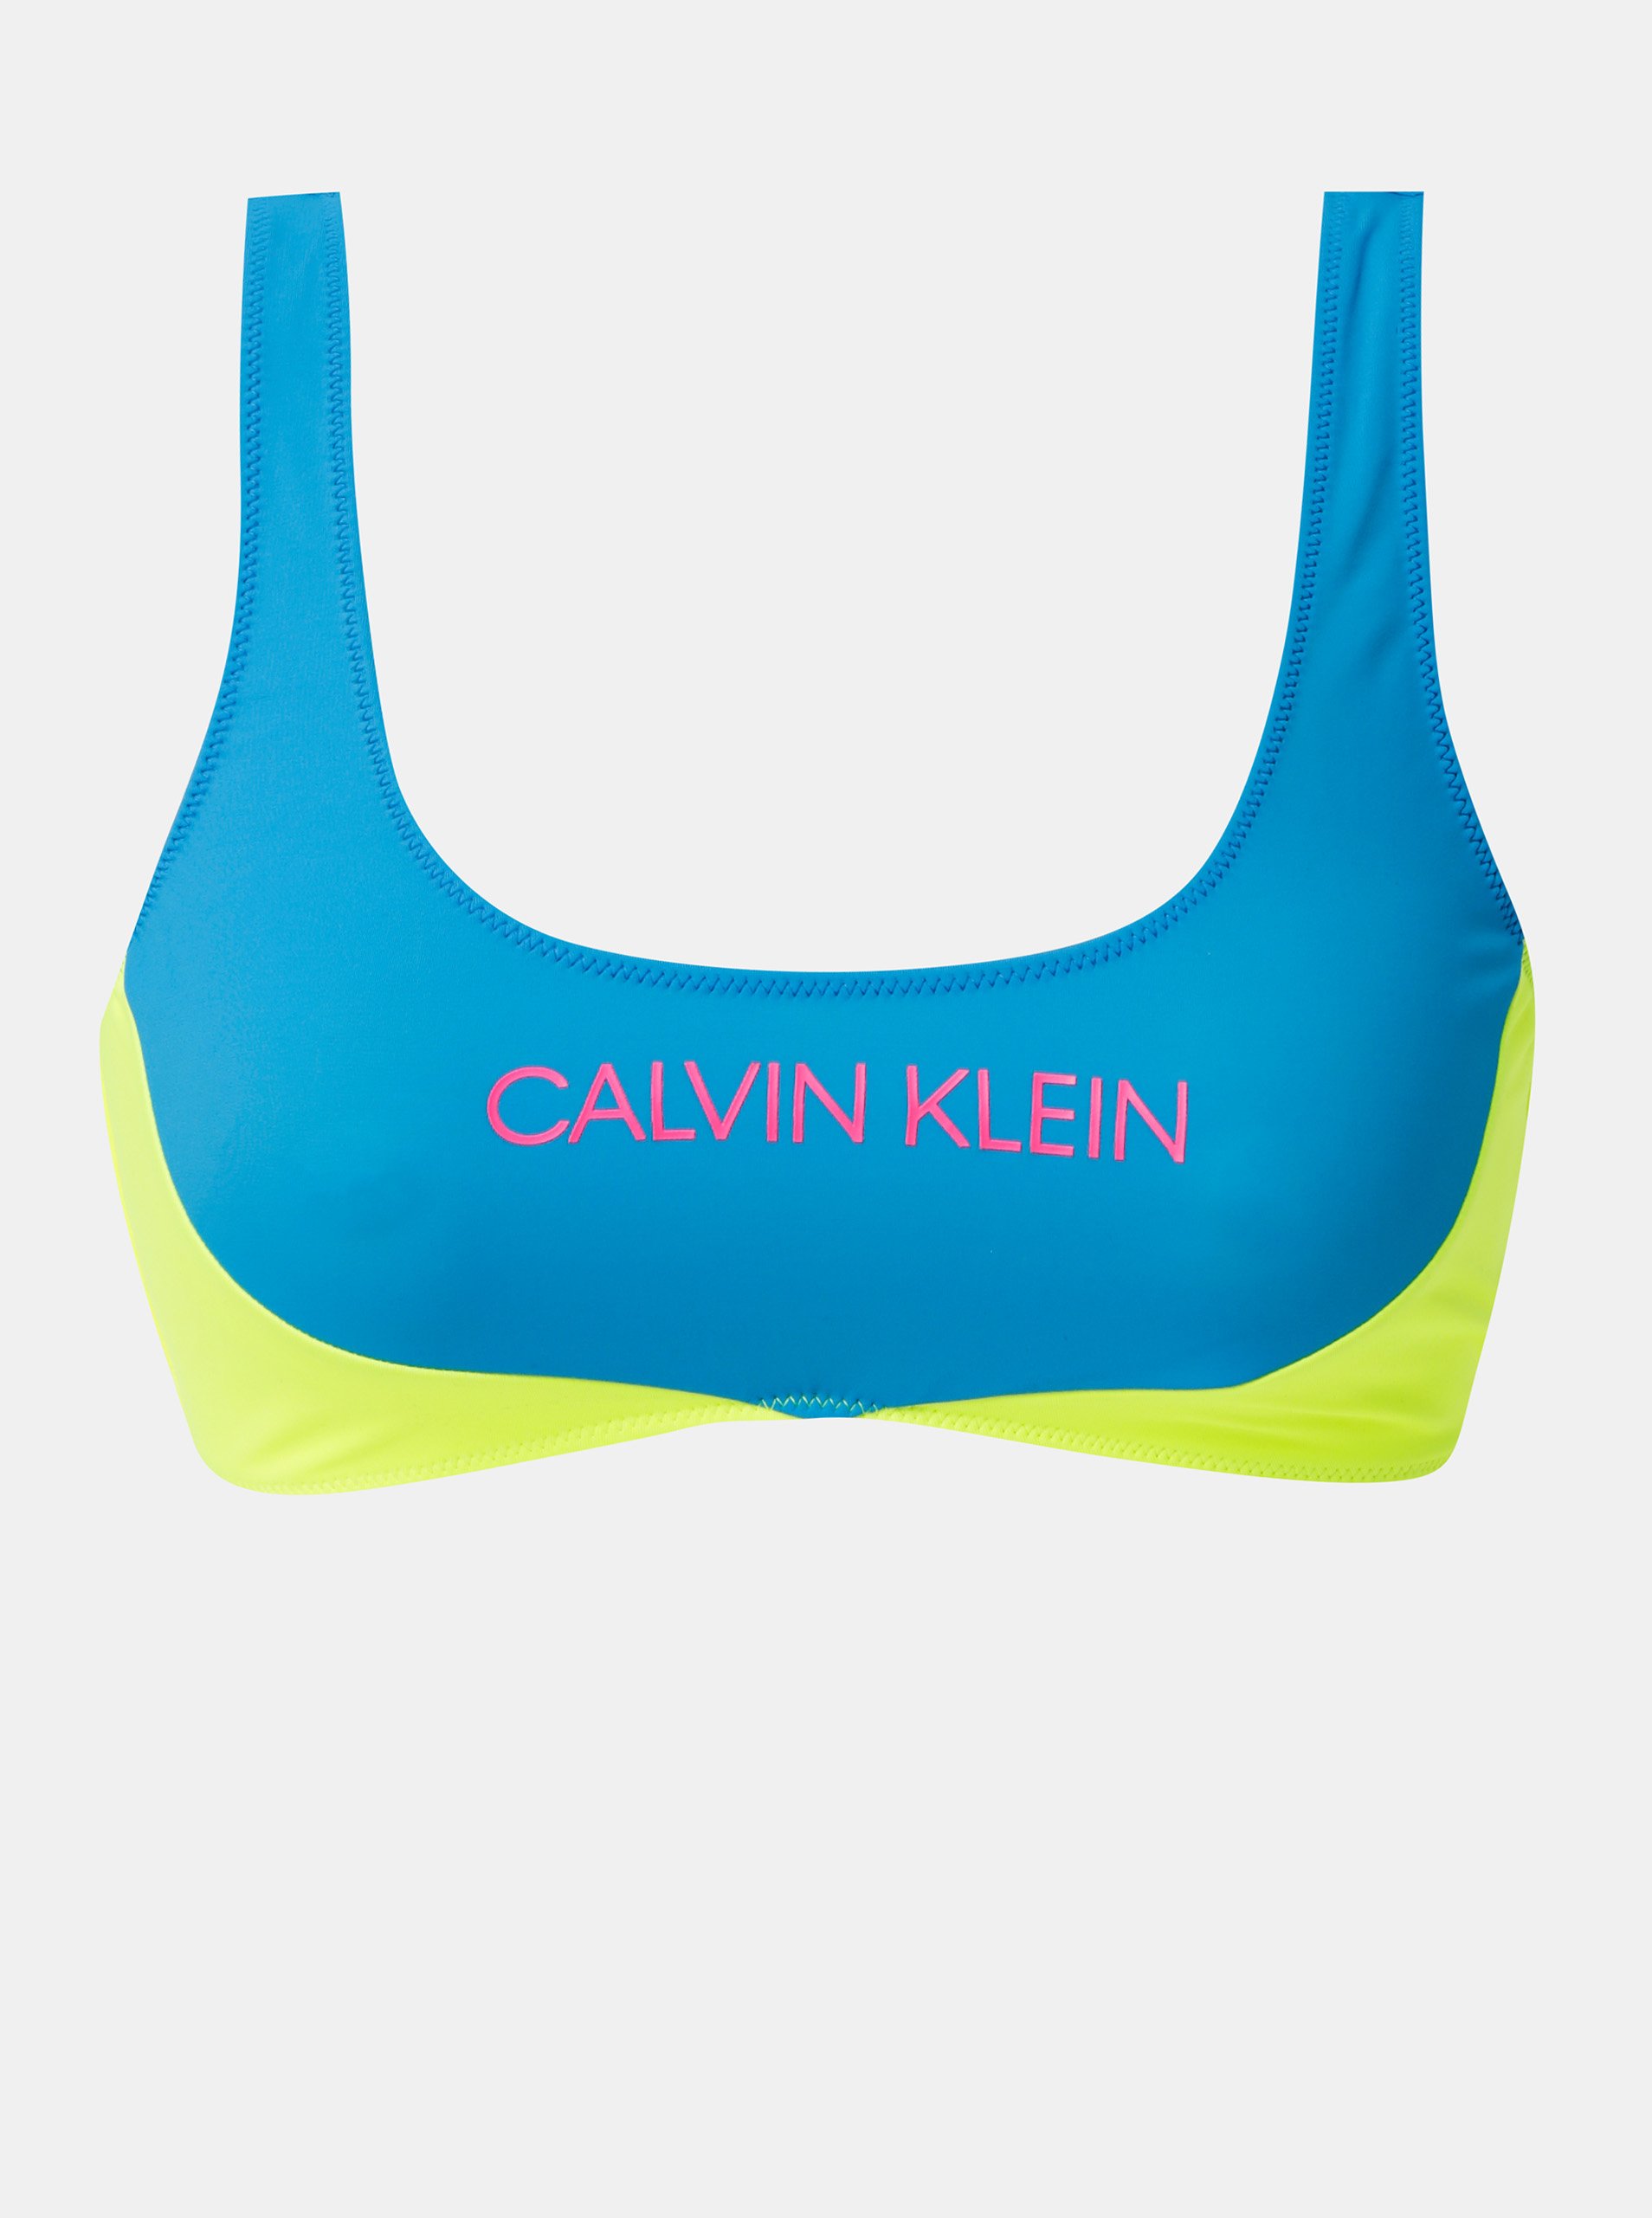 Lacno Žlto-modrý horný diel plaviek Calvin Klein Underwear